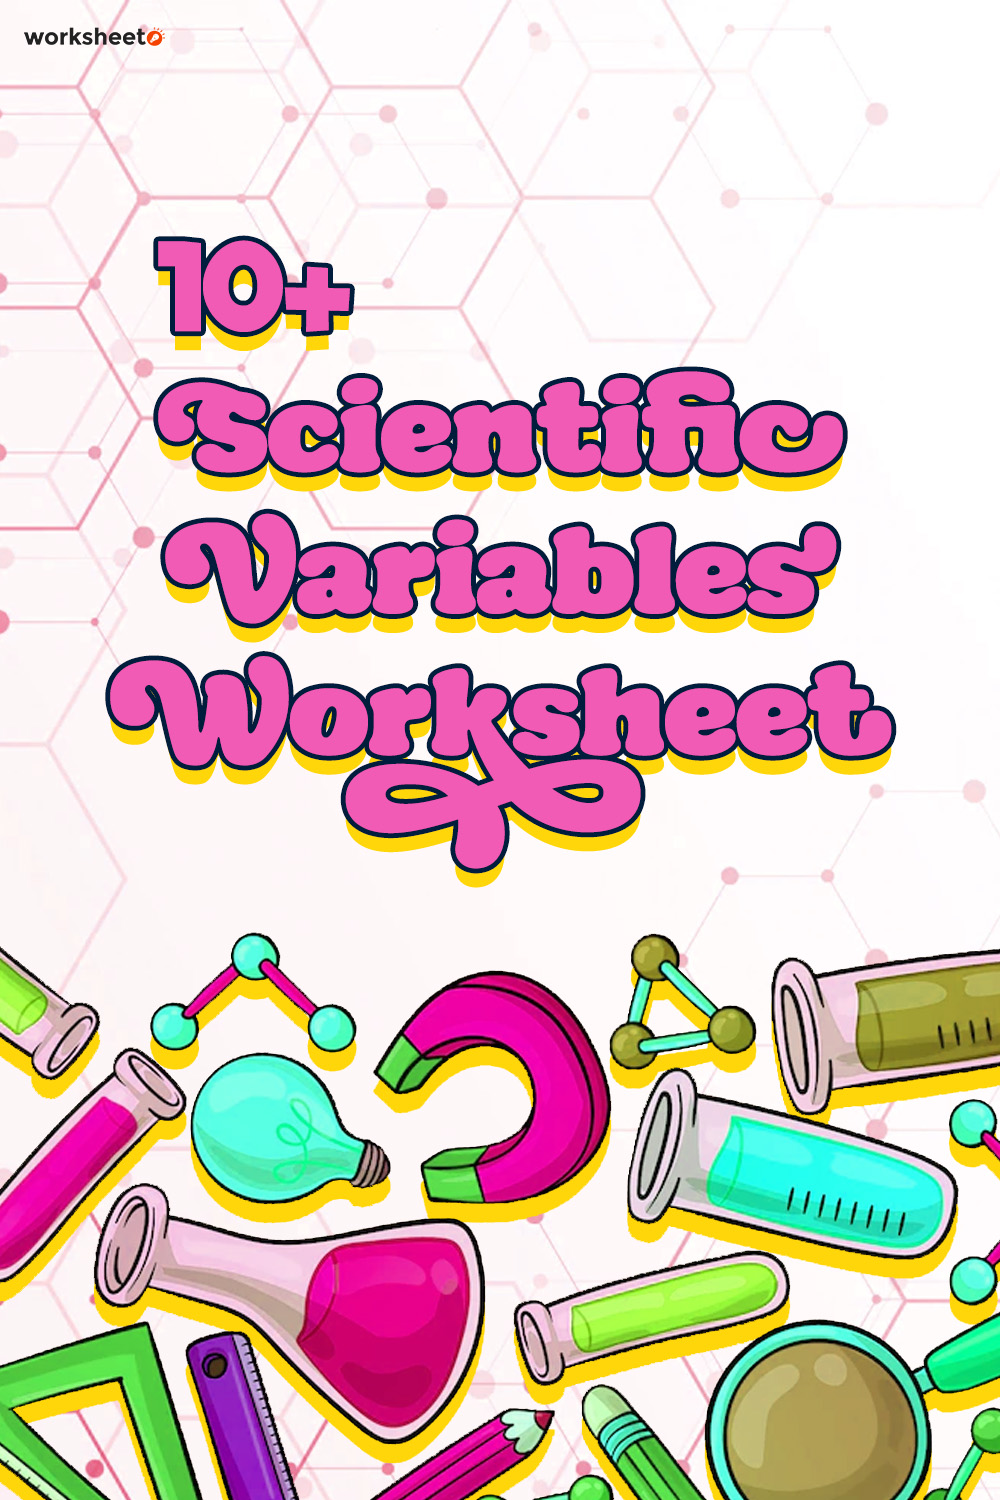 14 Images of Scientific Variables Worksheet